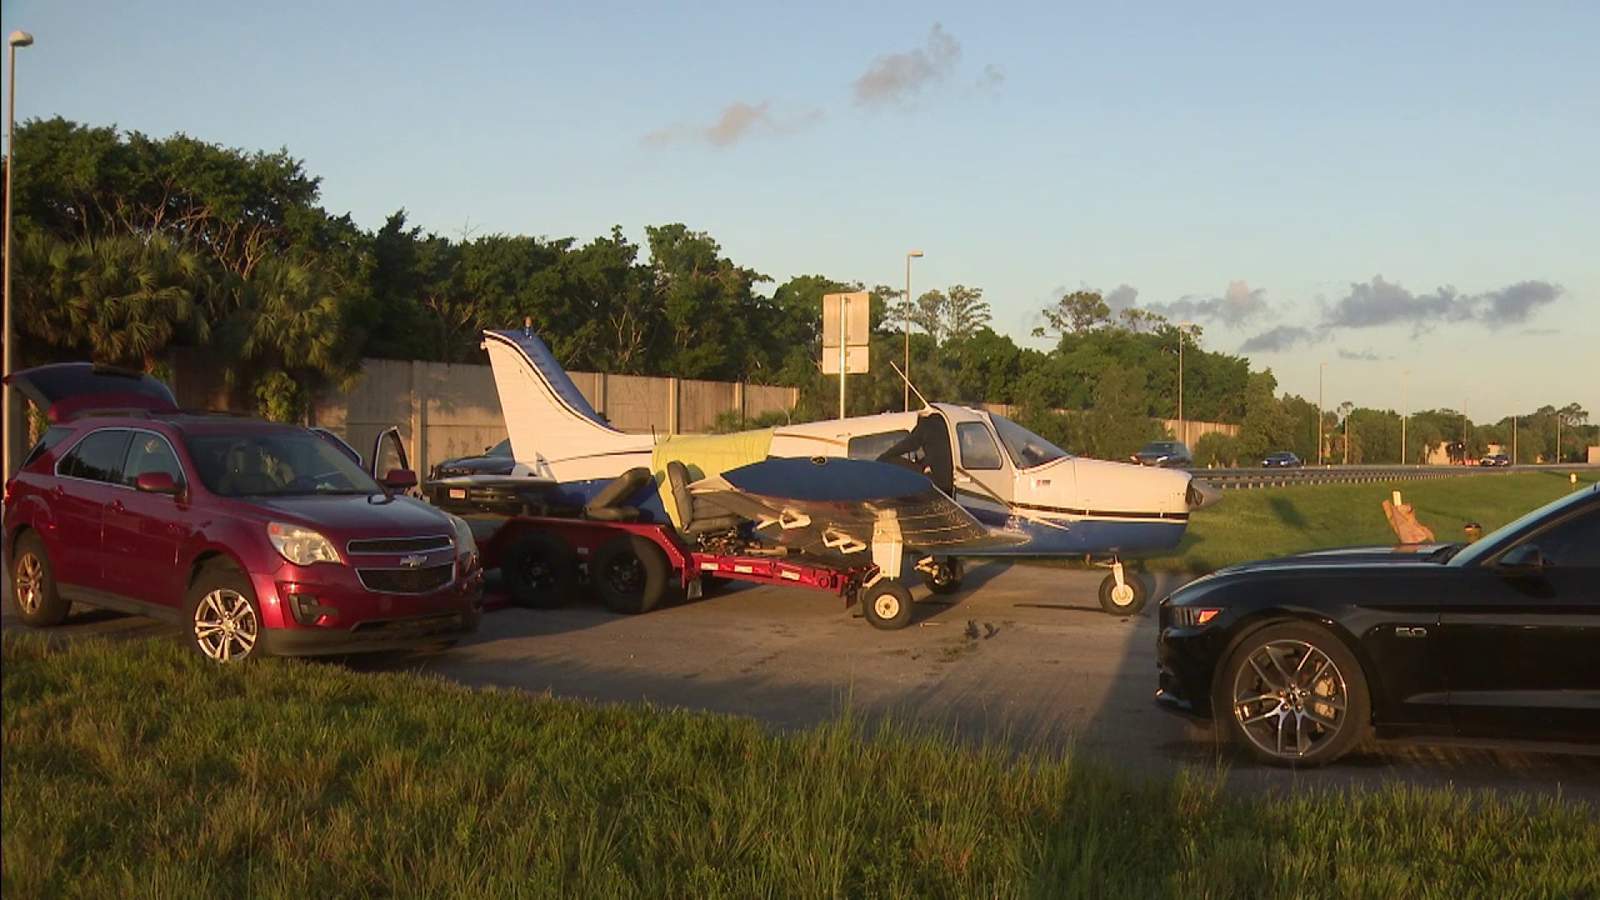 Small plane makes emergency landing on Florida highway